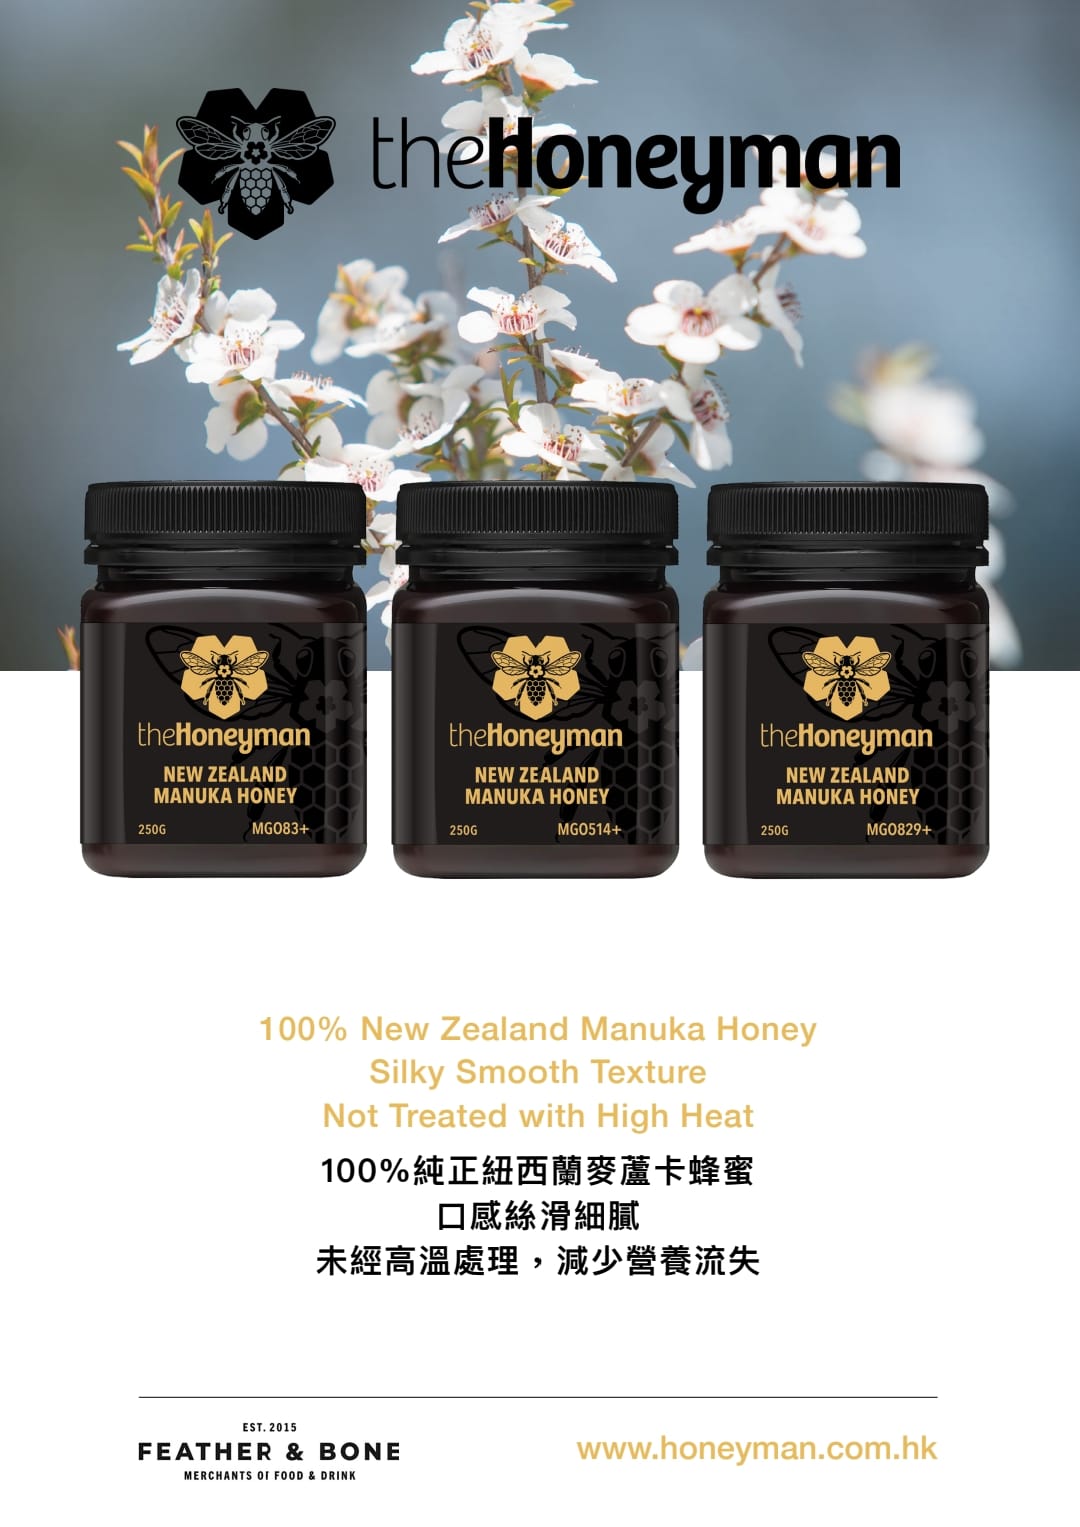 The Honeyman New Zealand Manuka Honey